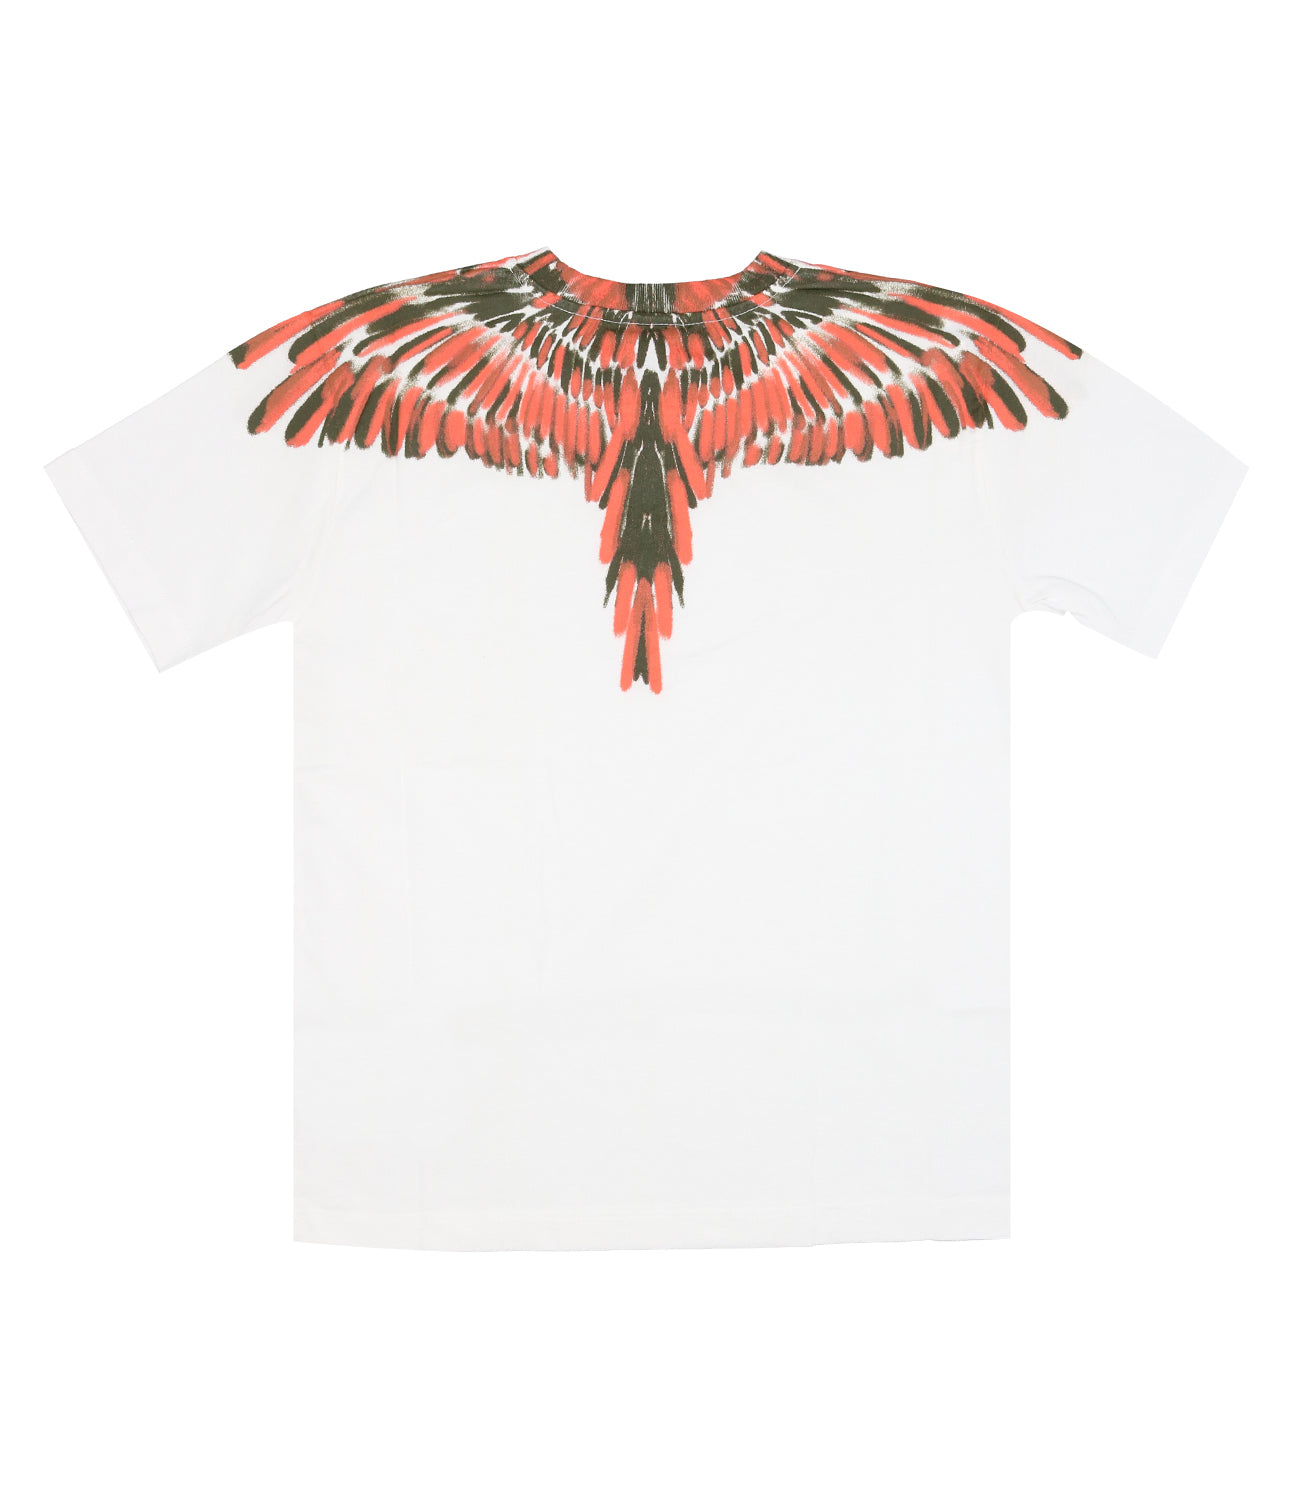 Marcelo Burlon Kids | T-Shirt Army Chalk Wings White and Orange